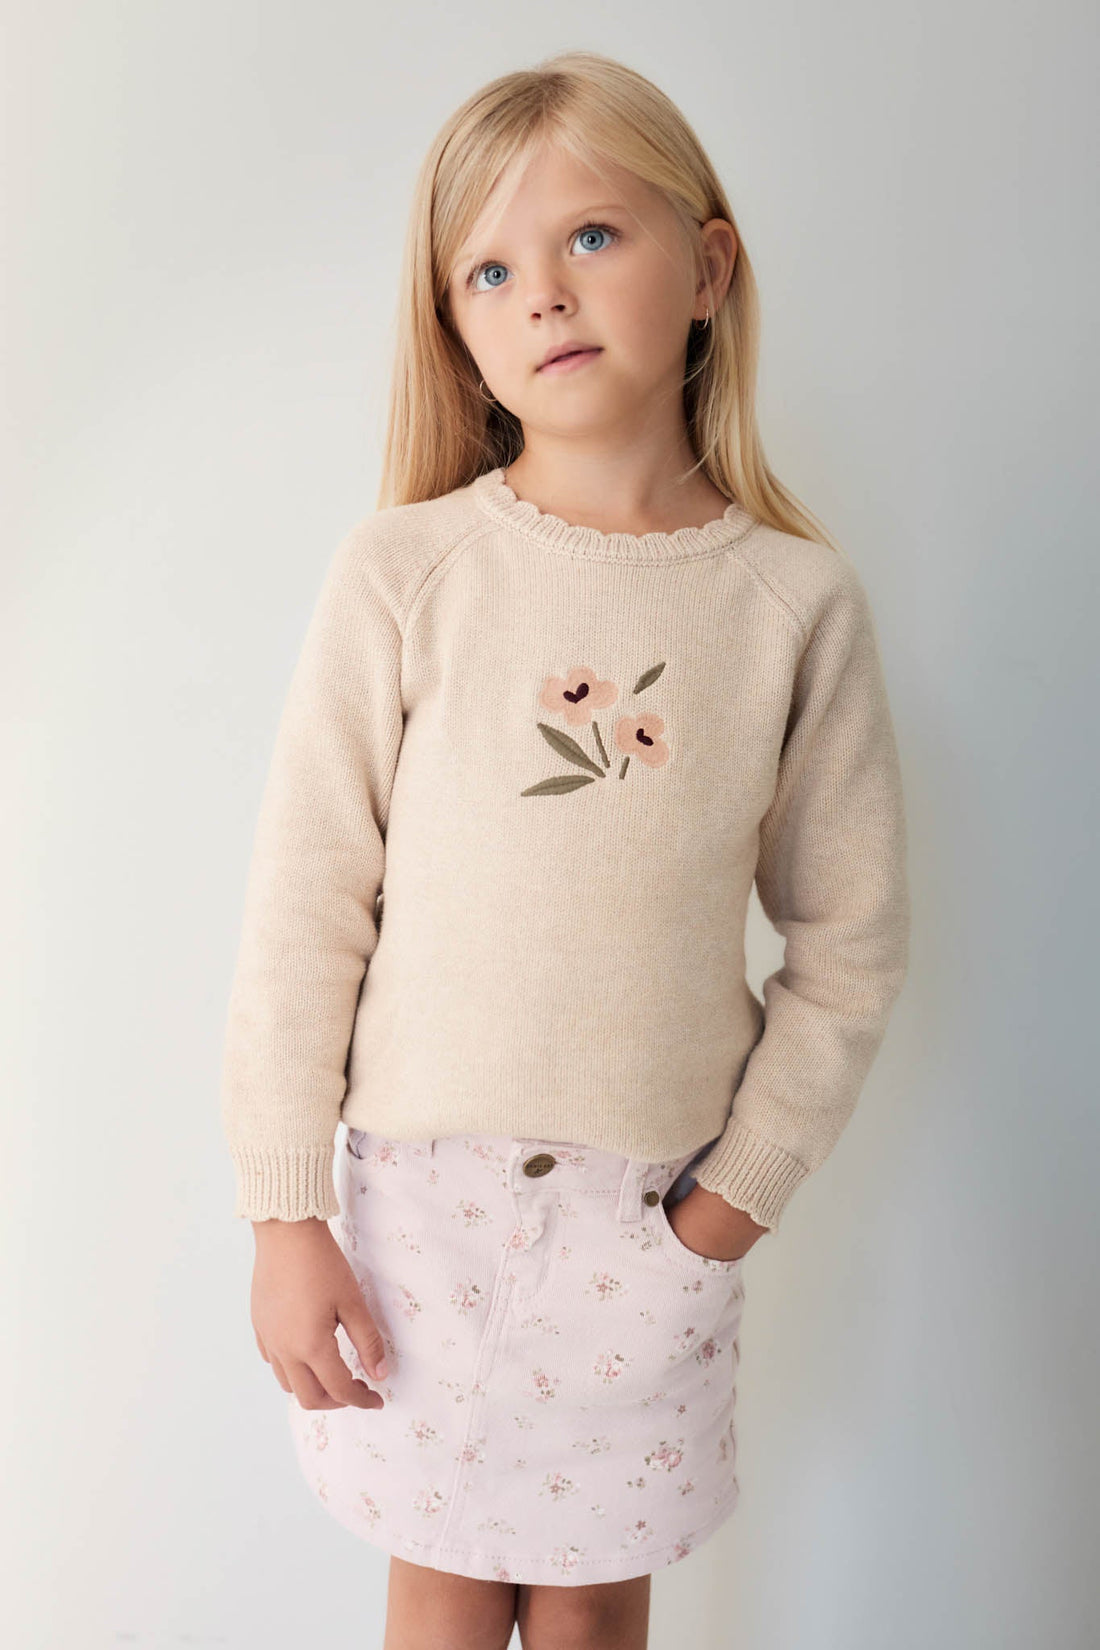 Adrienne Skirt - Petite Fleur Violet Childrens Skirt from Jamie Kay USA